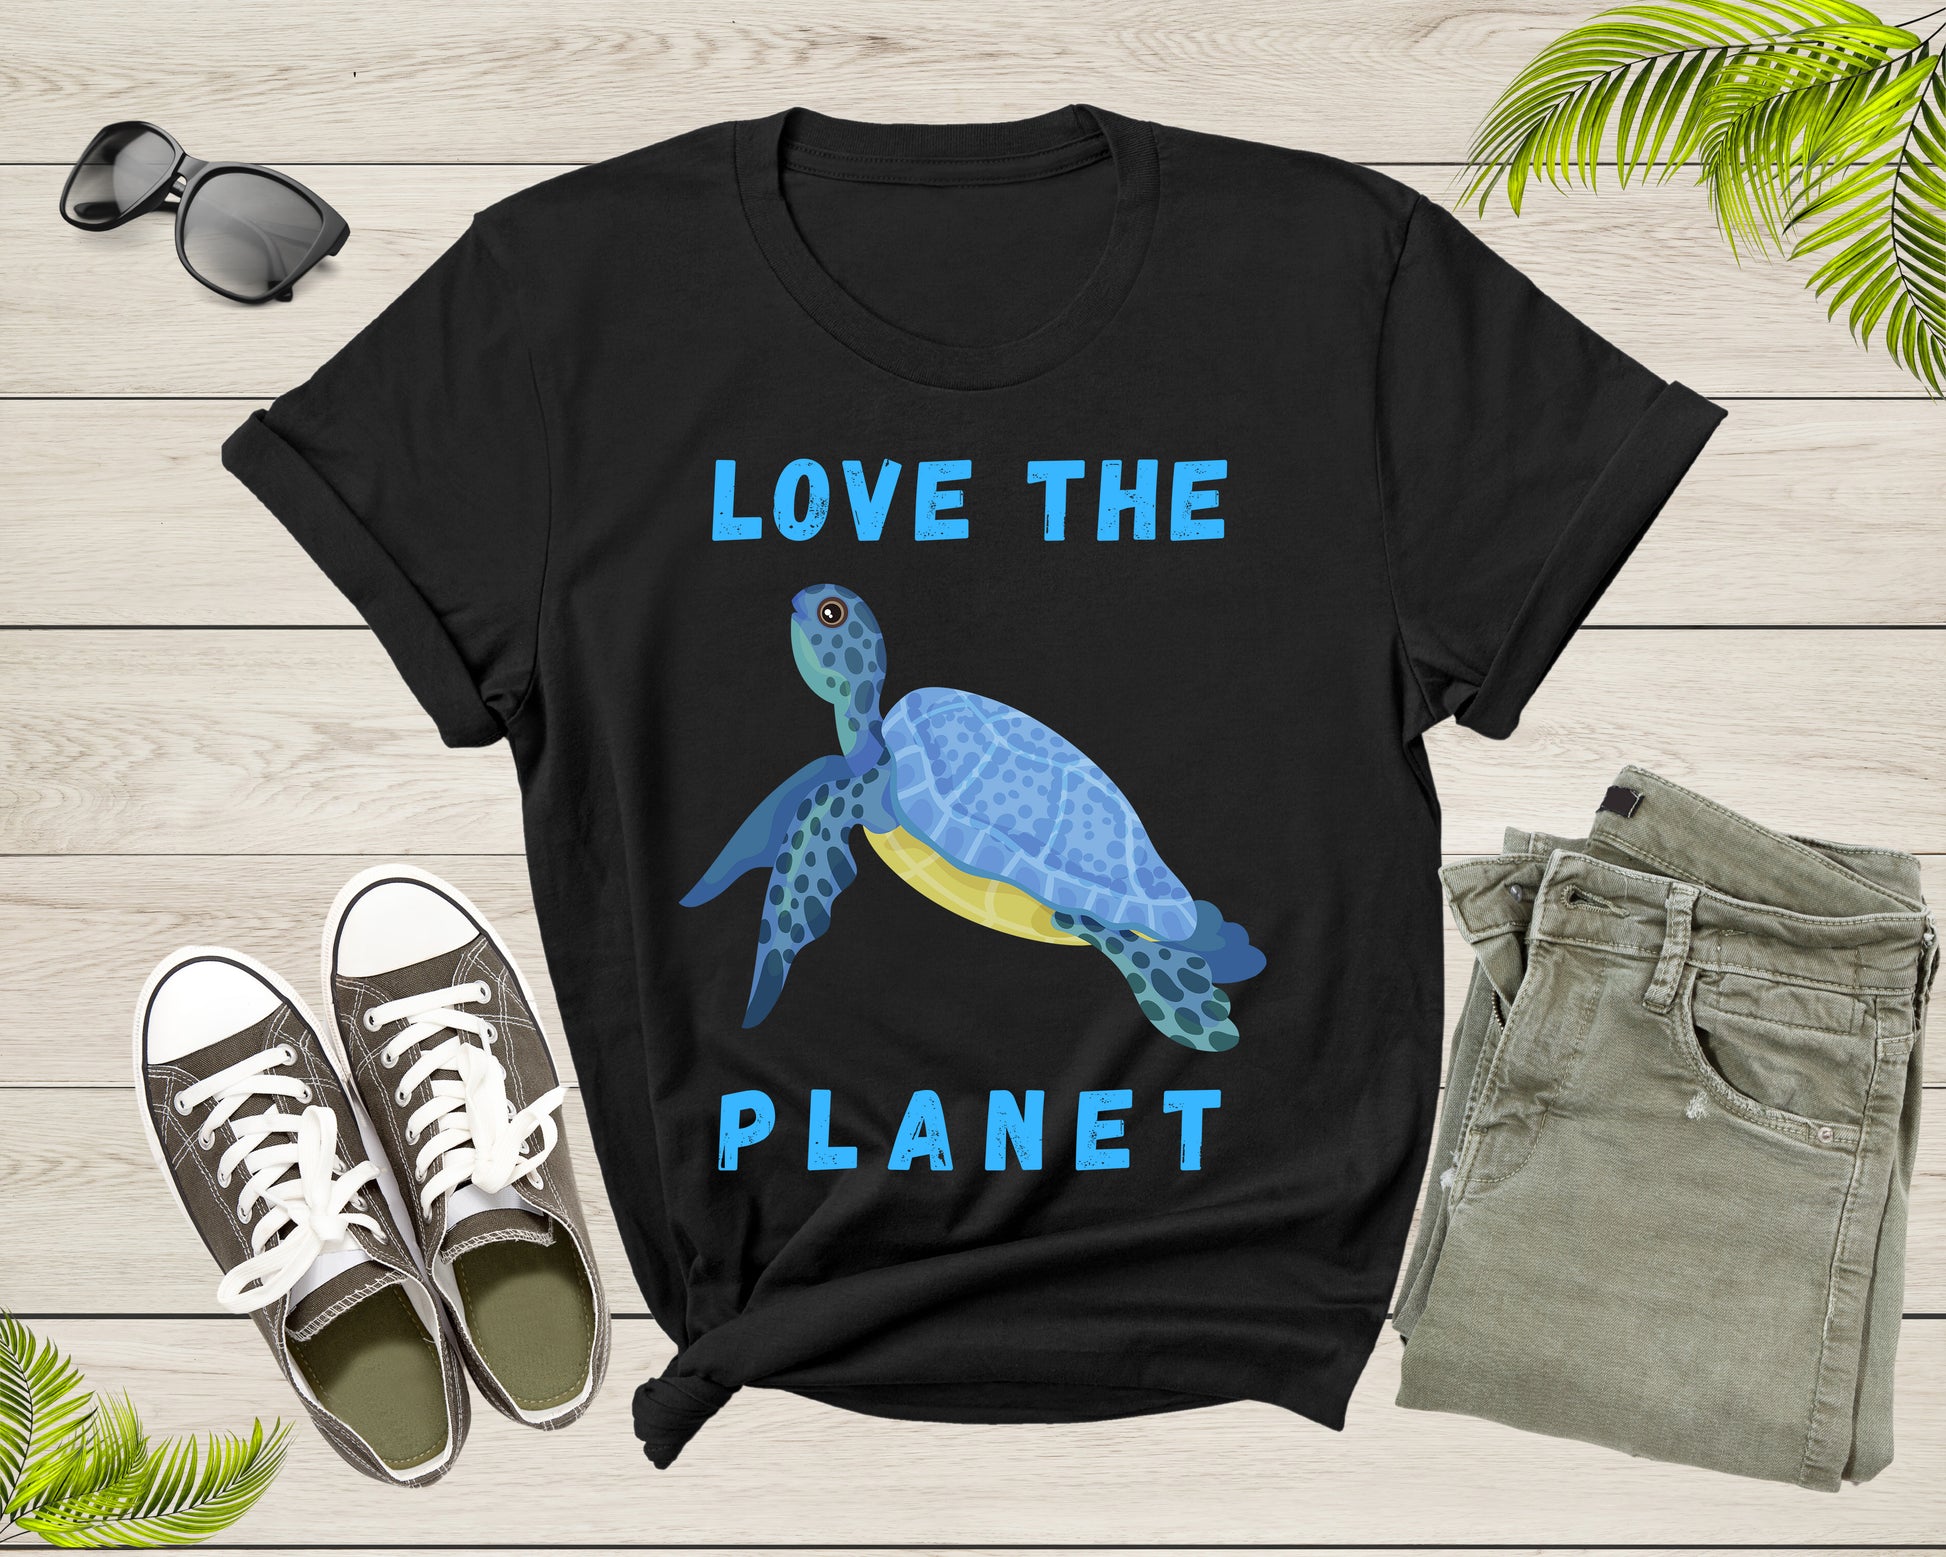 Mens Blue Swim Shorts With 'Tortoise & Turtle' Printed Design